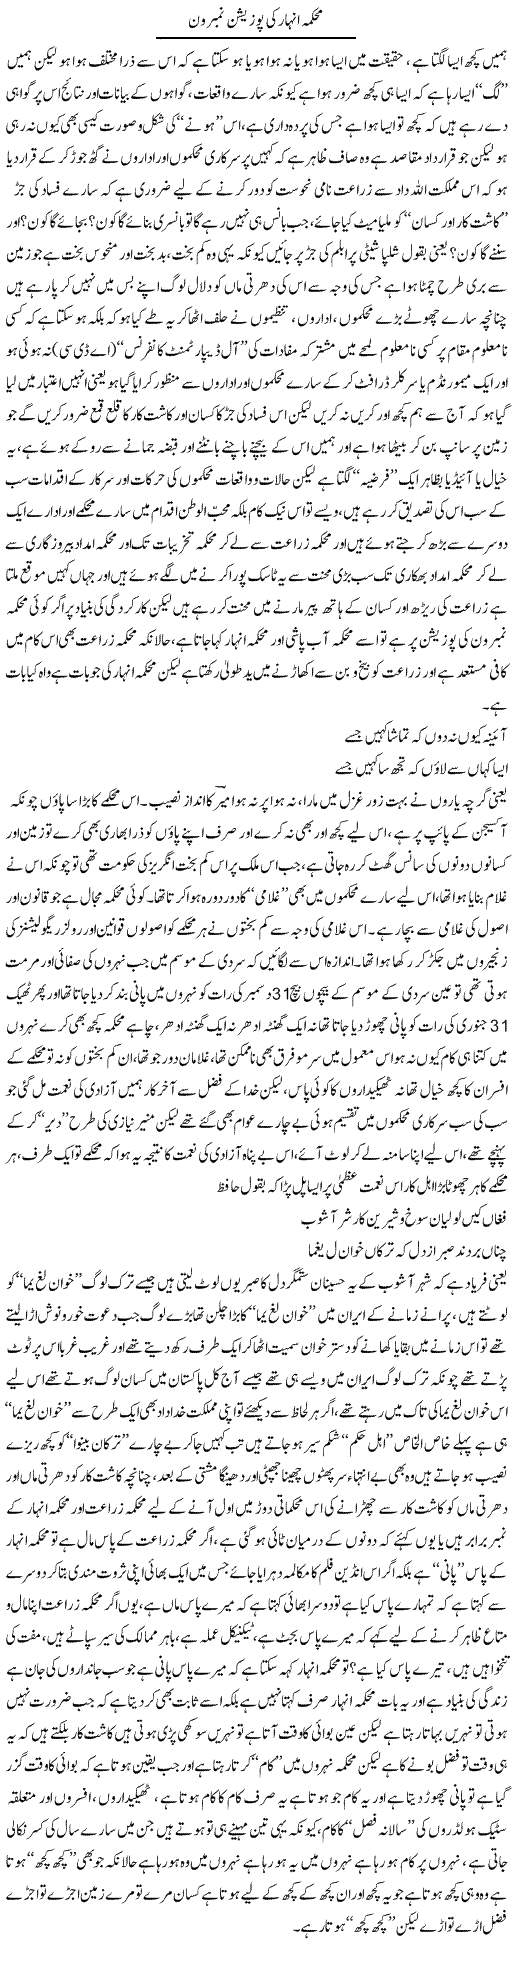 Mehakma Anhar Ki Position Number One | Saad Ullah Jan Barq | Daily Urdu Columns